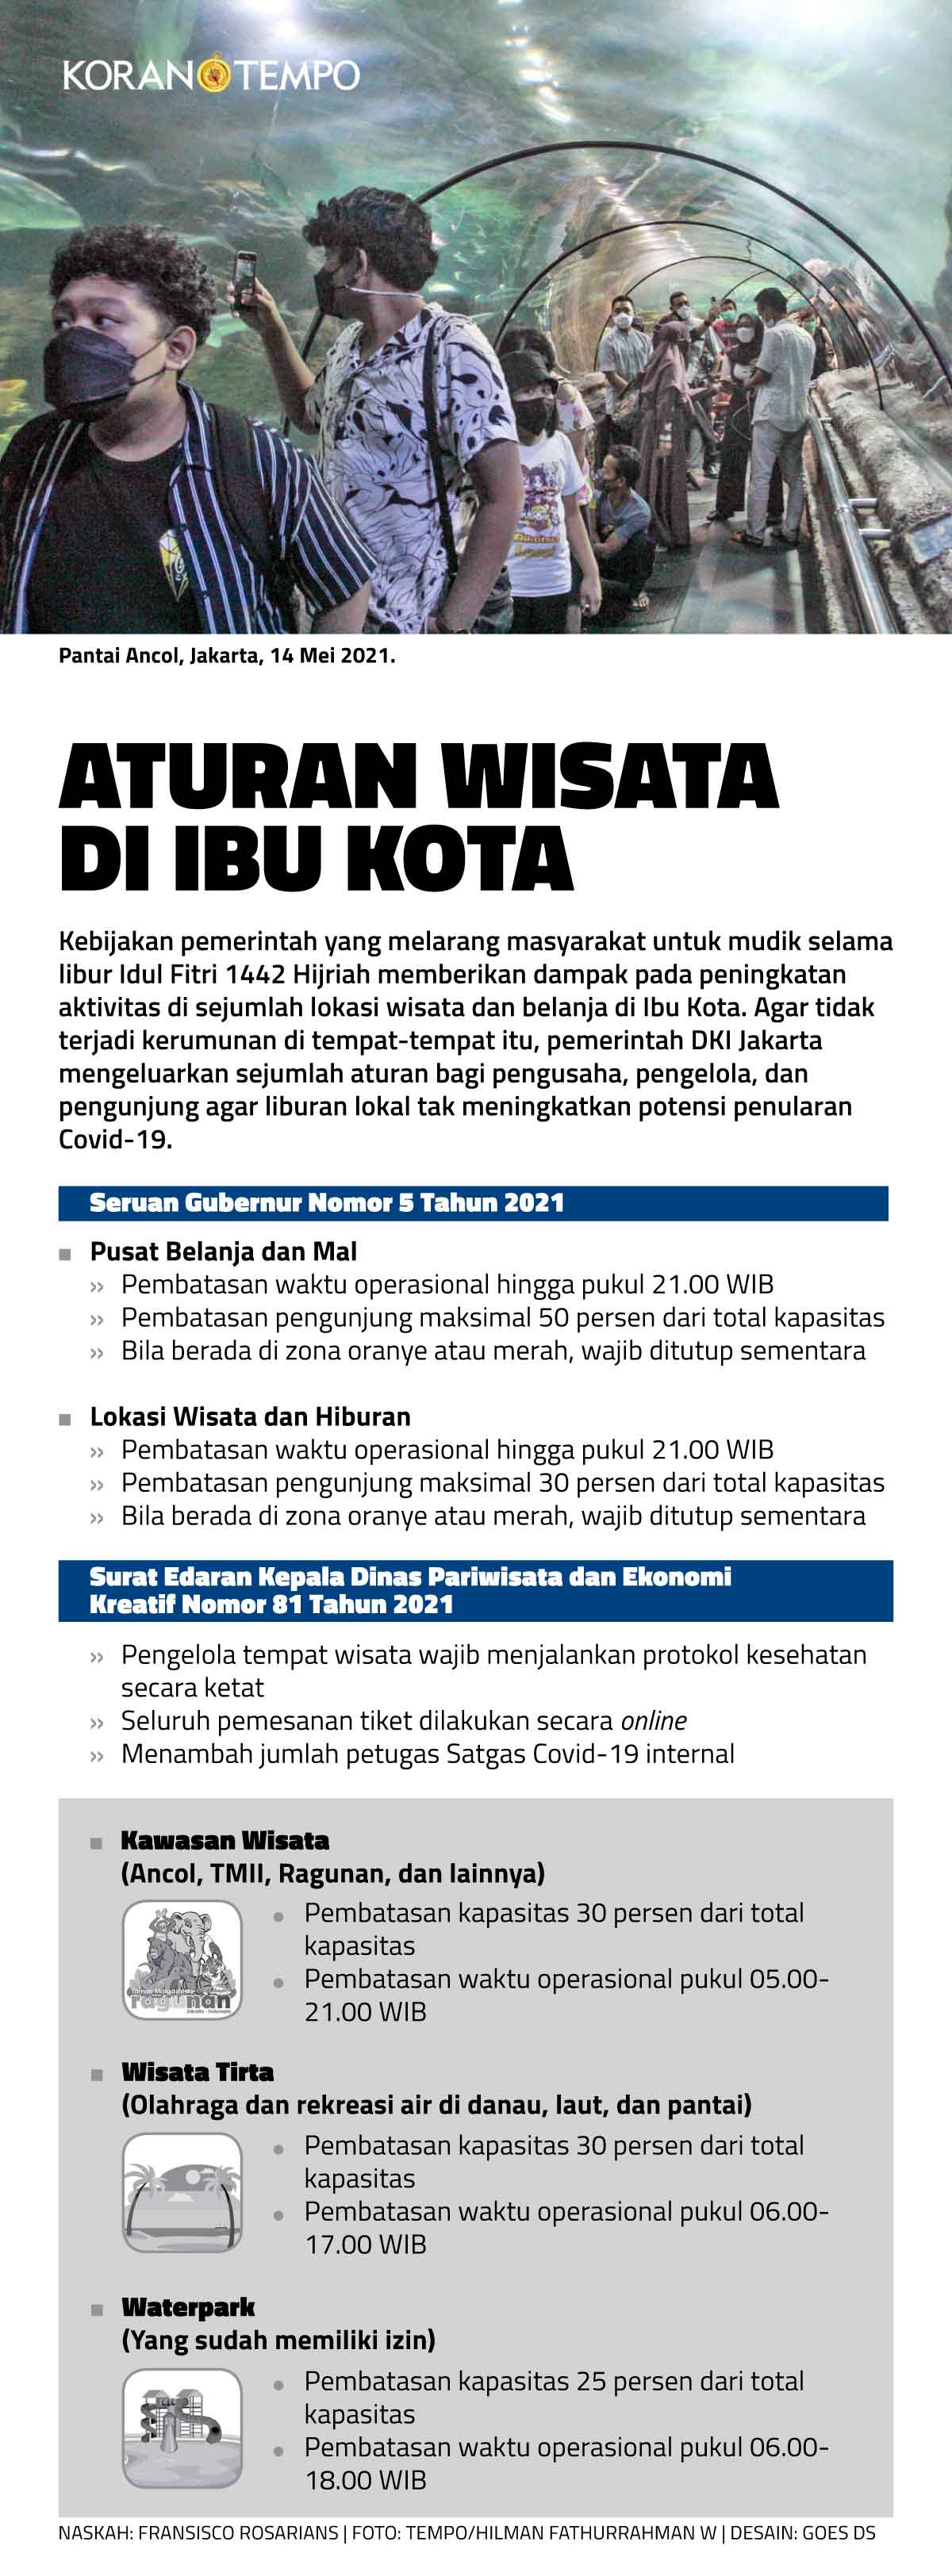 Aturan Wisata Di Jakarta - Metro - Koran.tempo.co